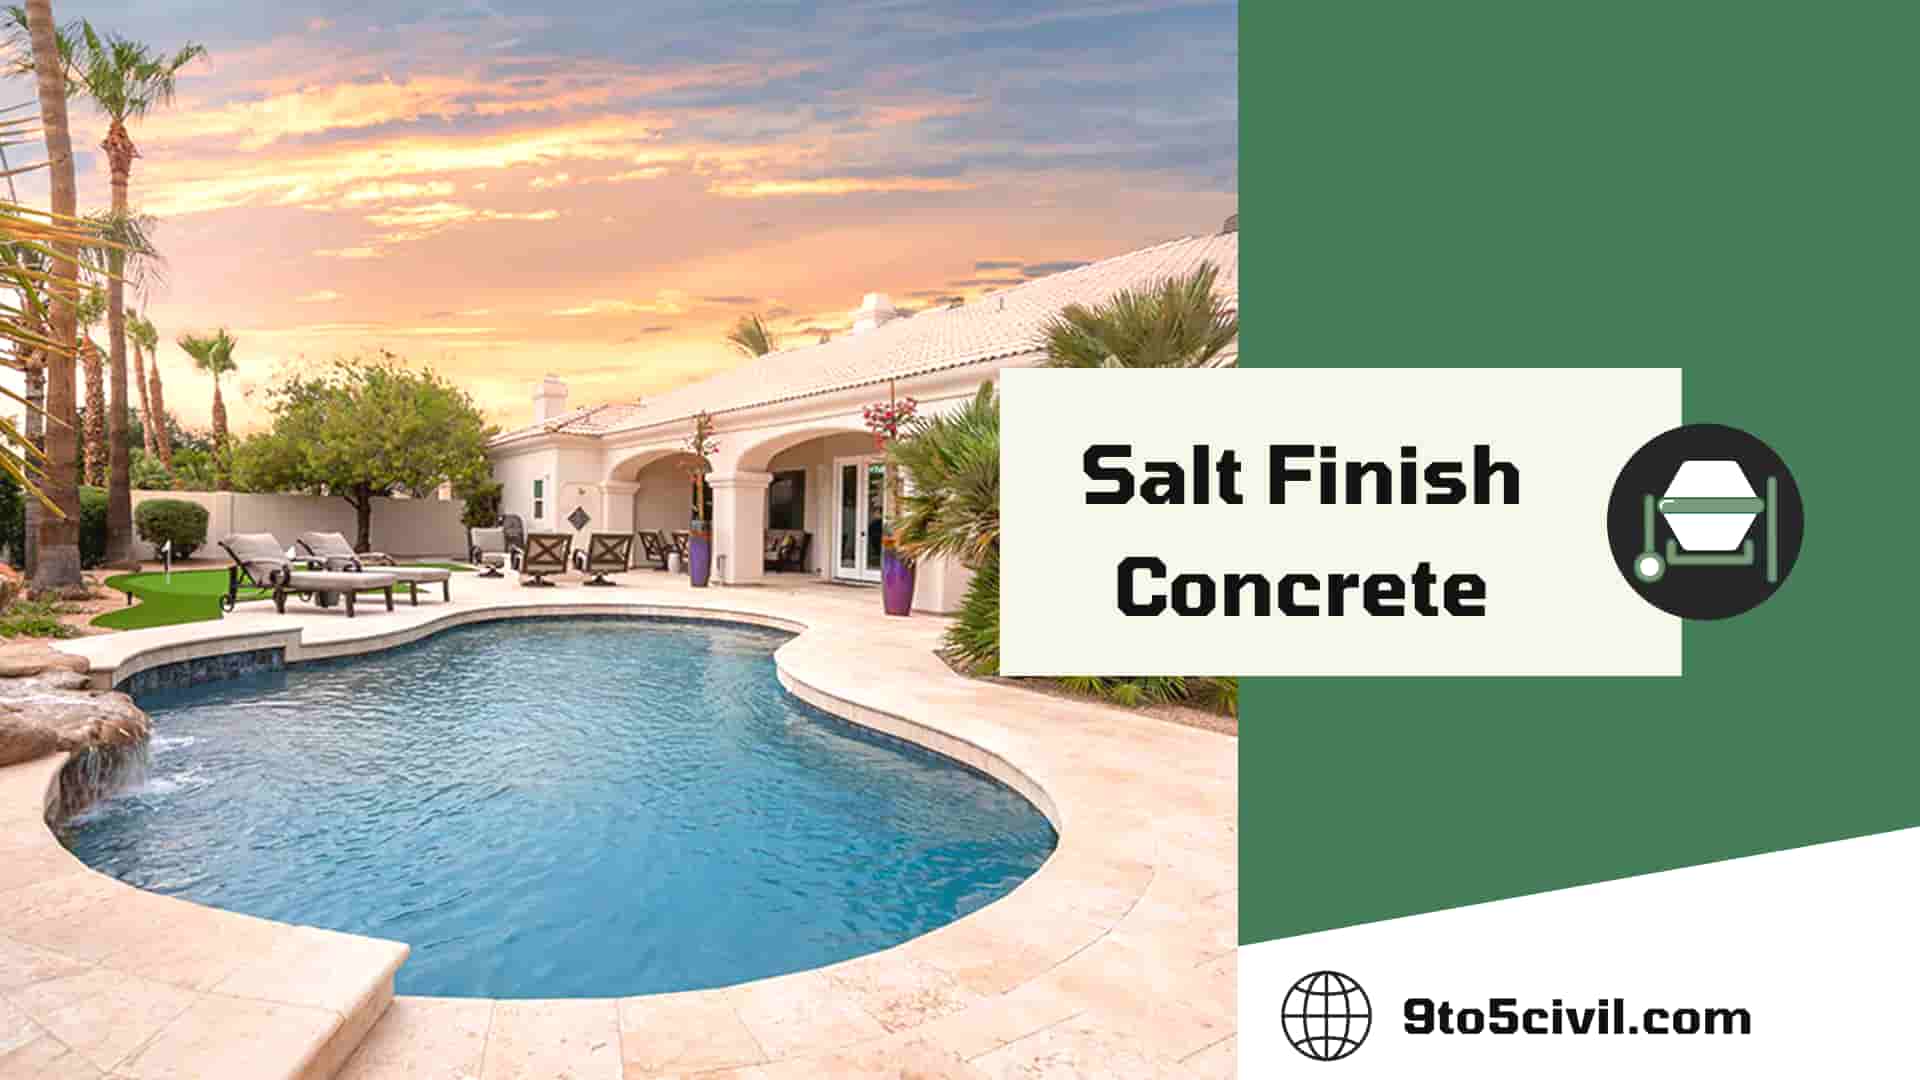 Salt Finish Concrete